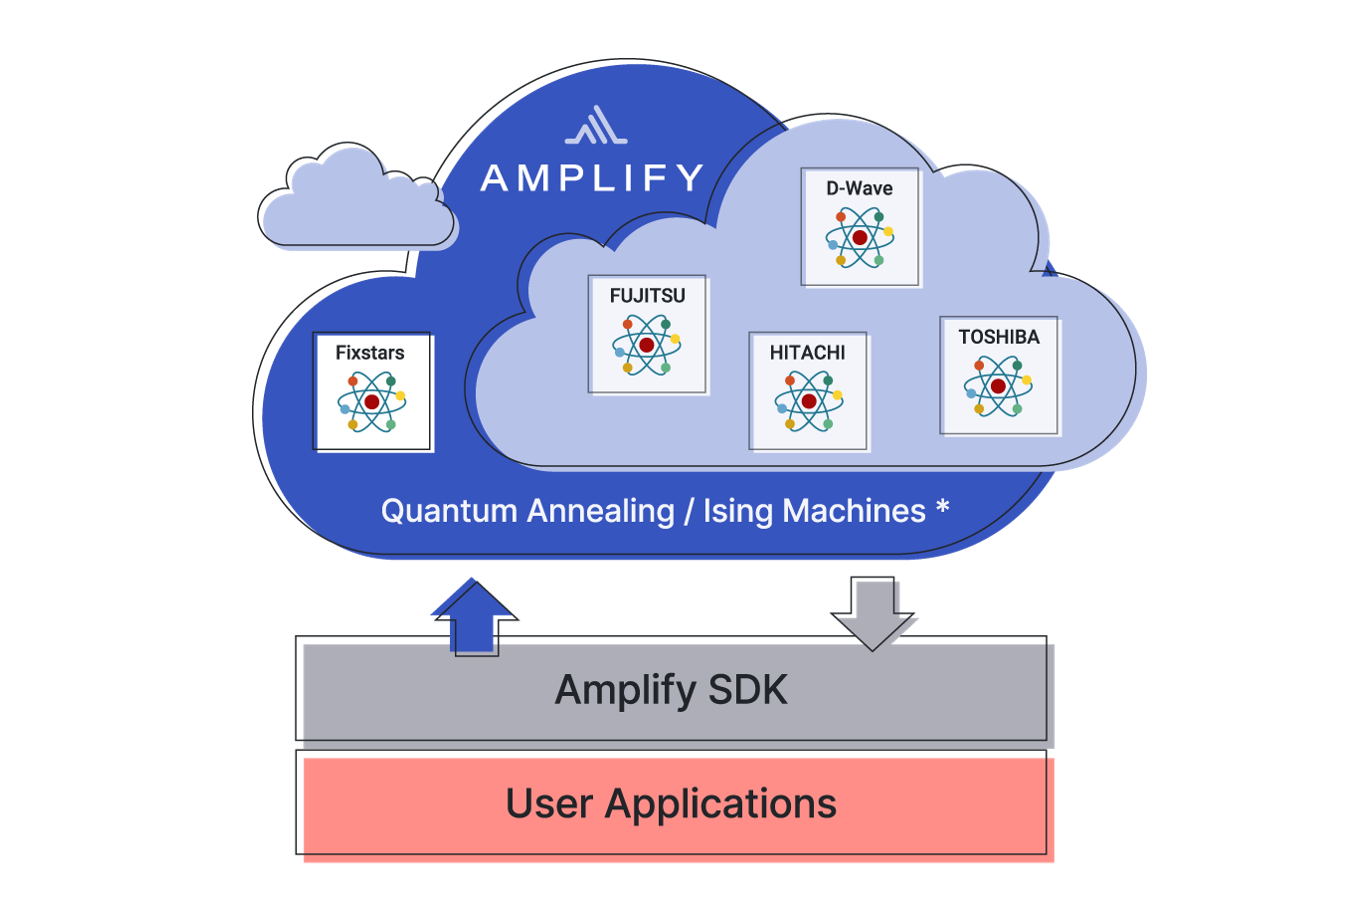 Fixstars Amplify は、量子アニーリング・イジングマシンを使った システム開発・運用を実現するためのクラウドサービス